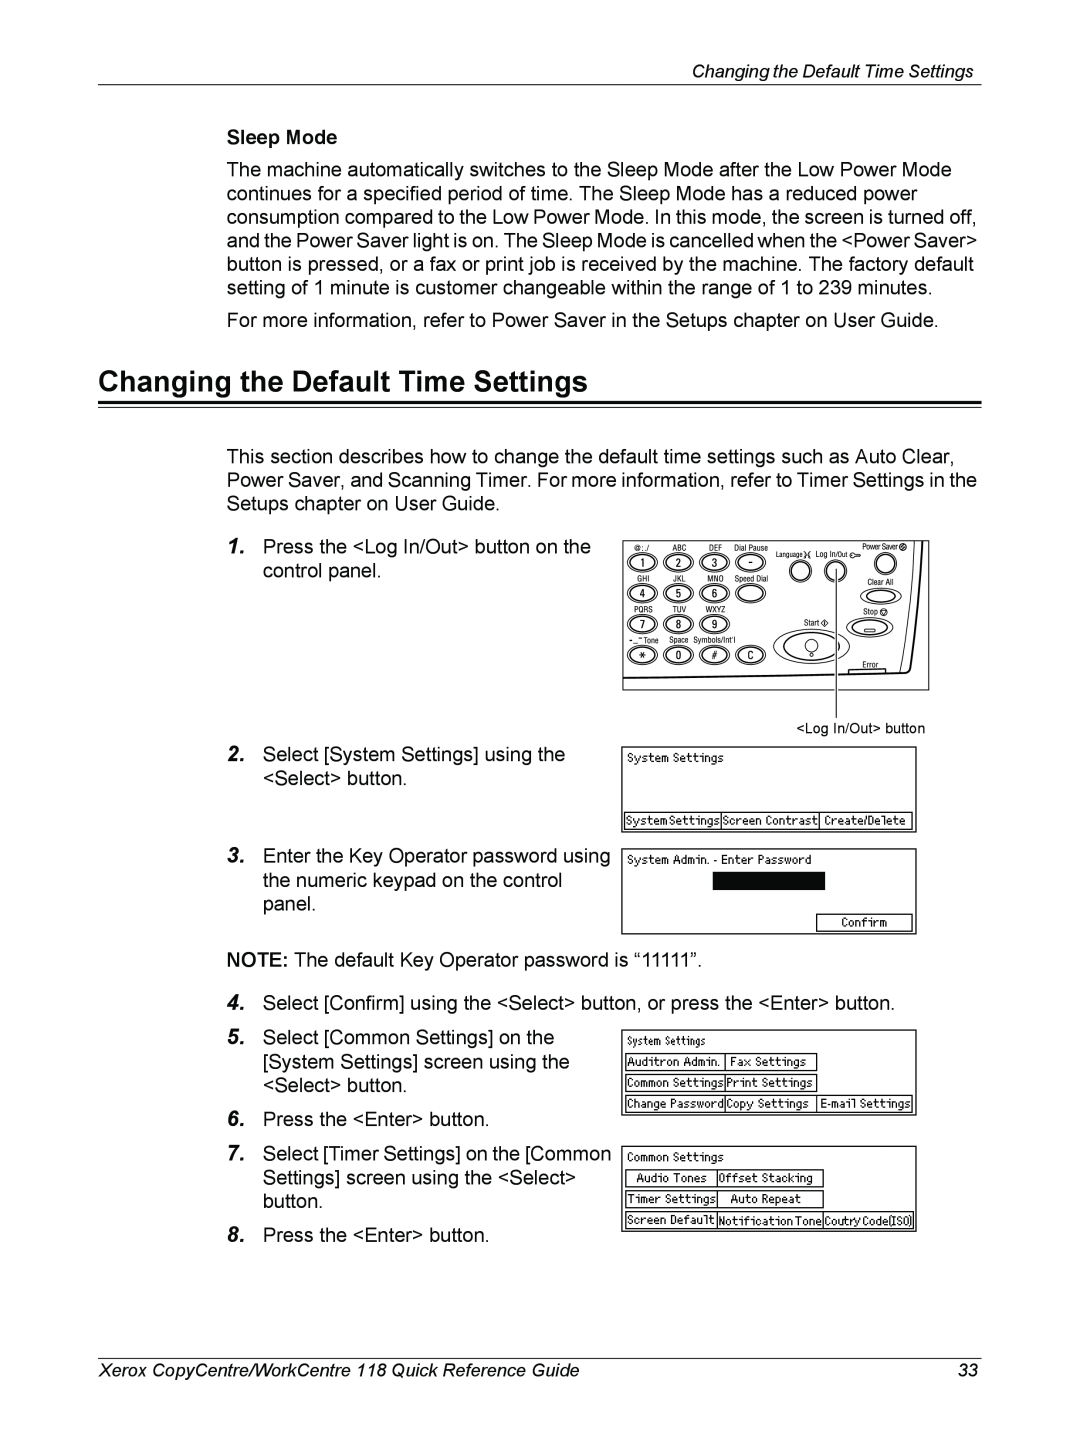 Xerox C118, M118i manual Changing the Default Time Settings, Sleep Mode 